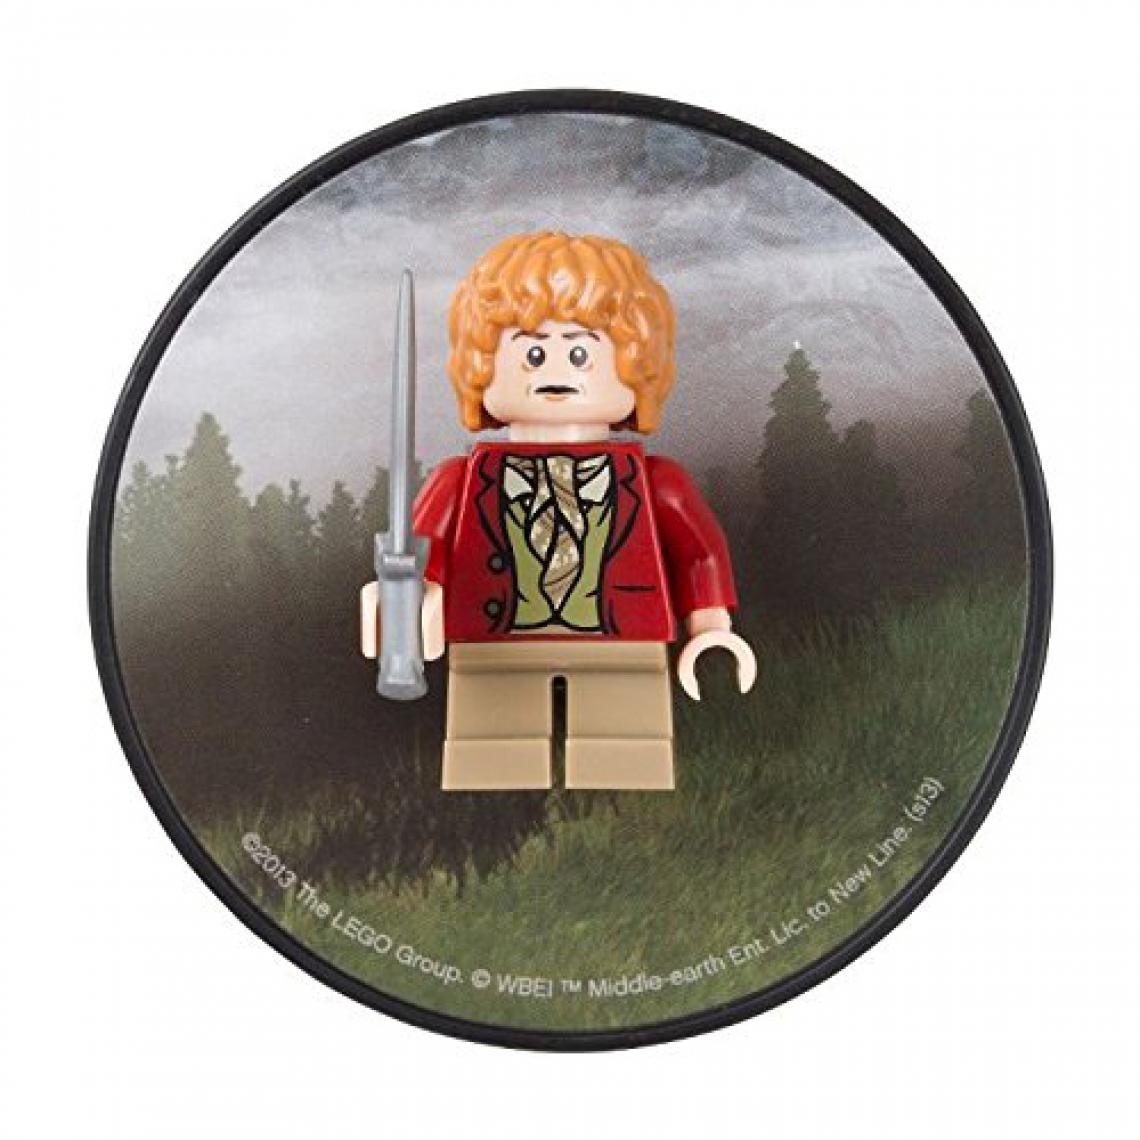 Lego - LEgO Le Hobbit Un voyage inattendu Aimant Bilbo Baggins - Briques et blocs